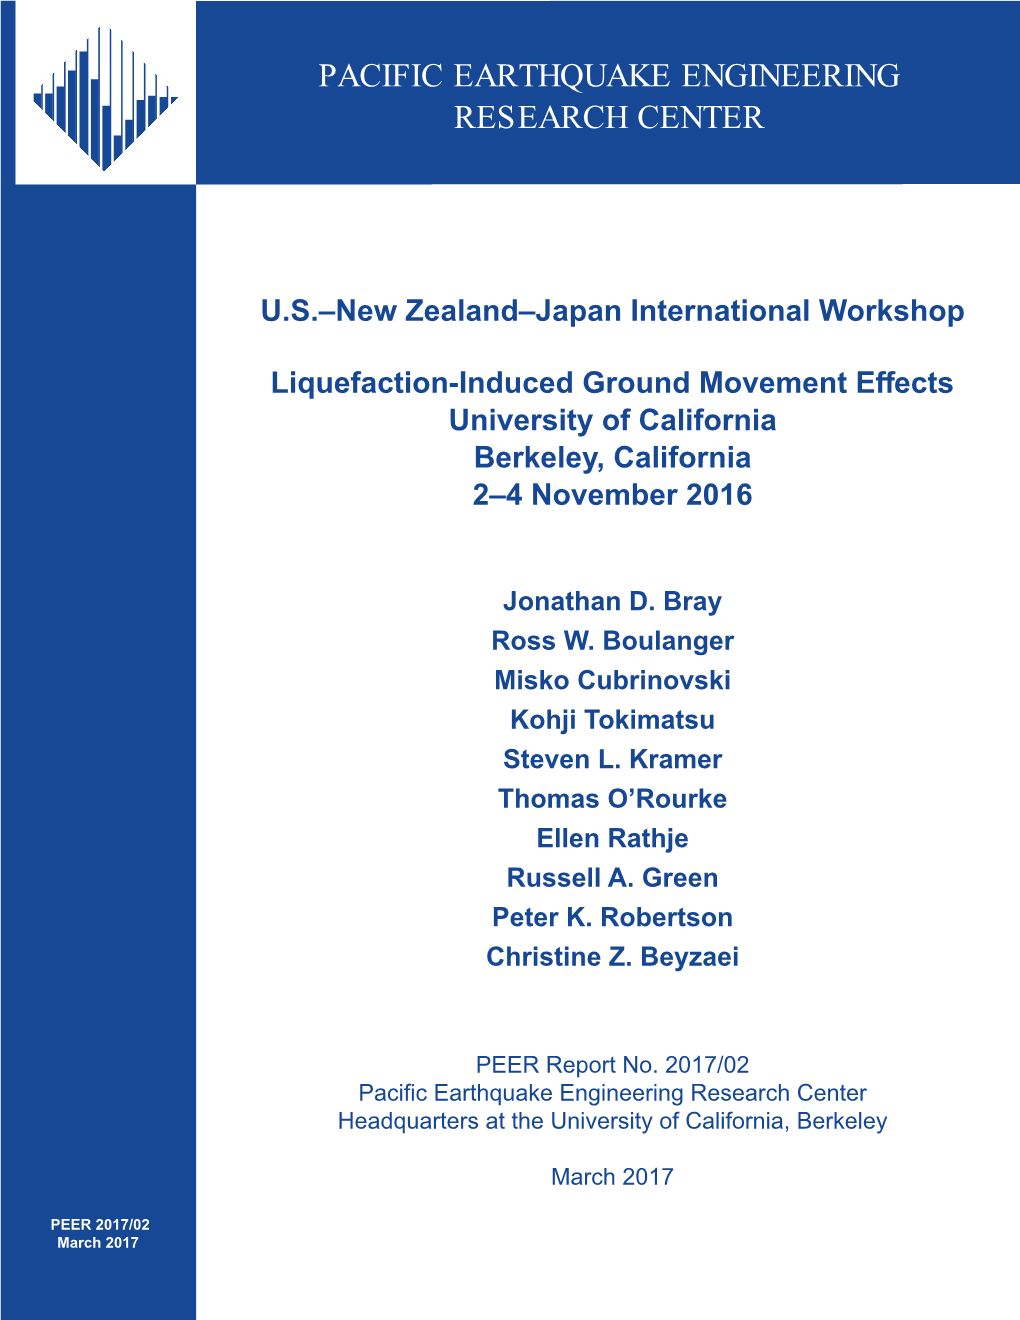 U.S.—New Zealand— Japan International Workshop, Liquefaction-Induced Ground